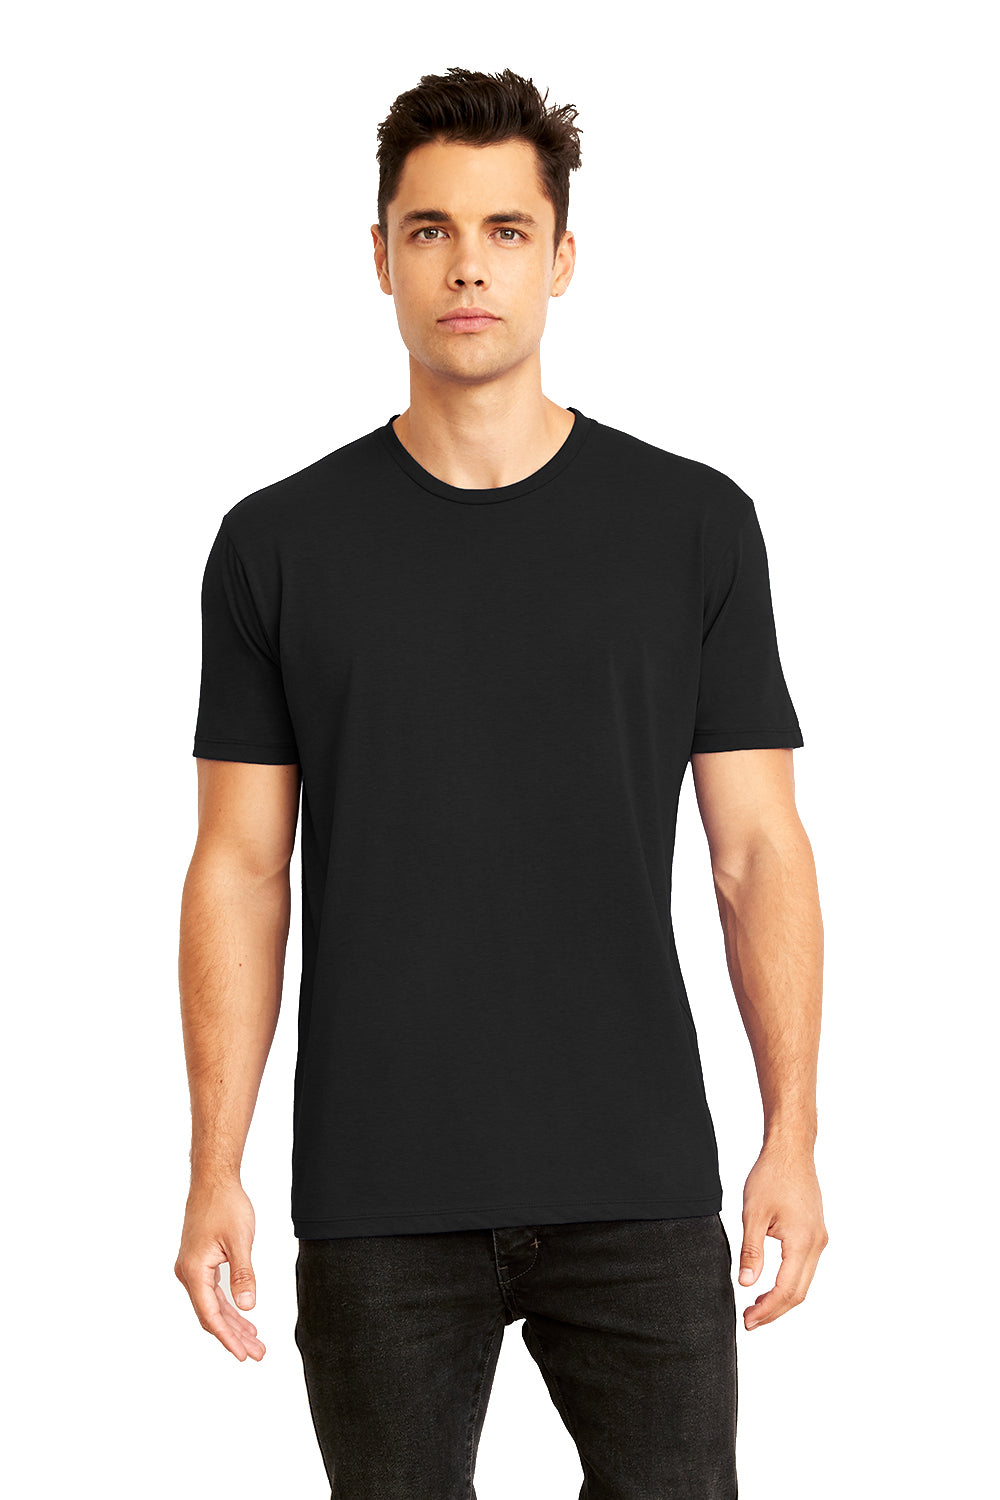 Next Level 4210 Mens Eco Performance Short Sleeve Crewneck T-Shirt Black Front